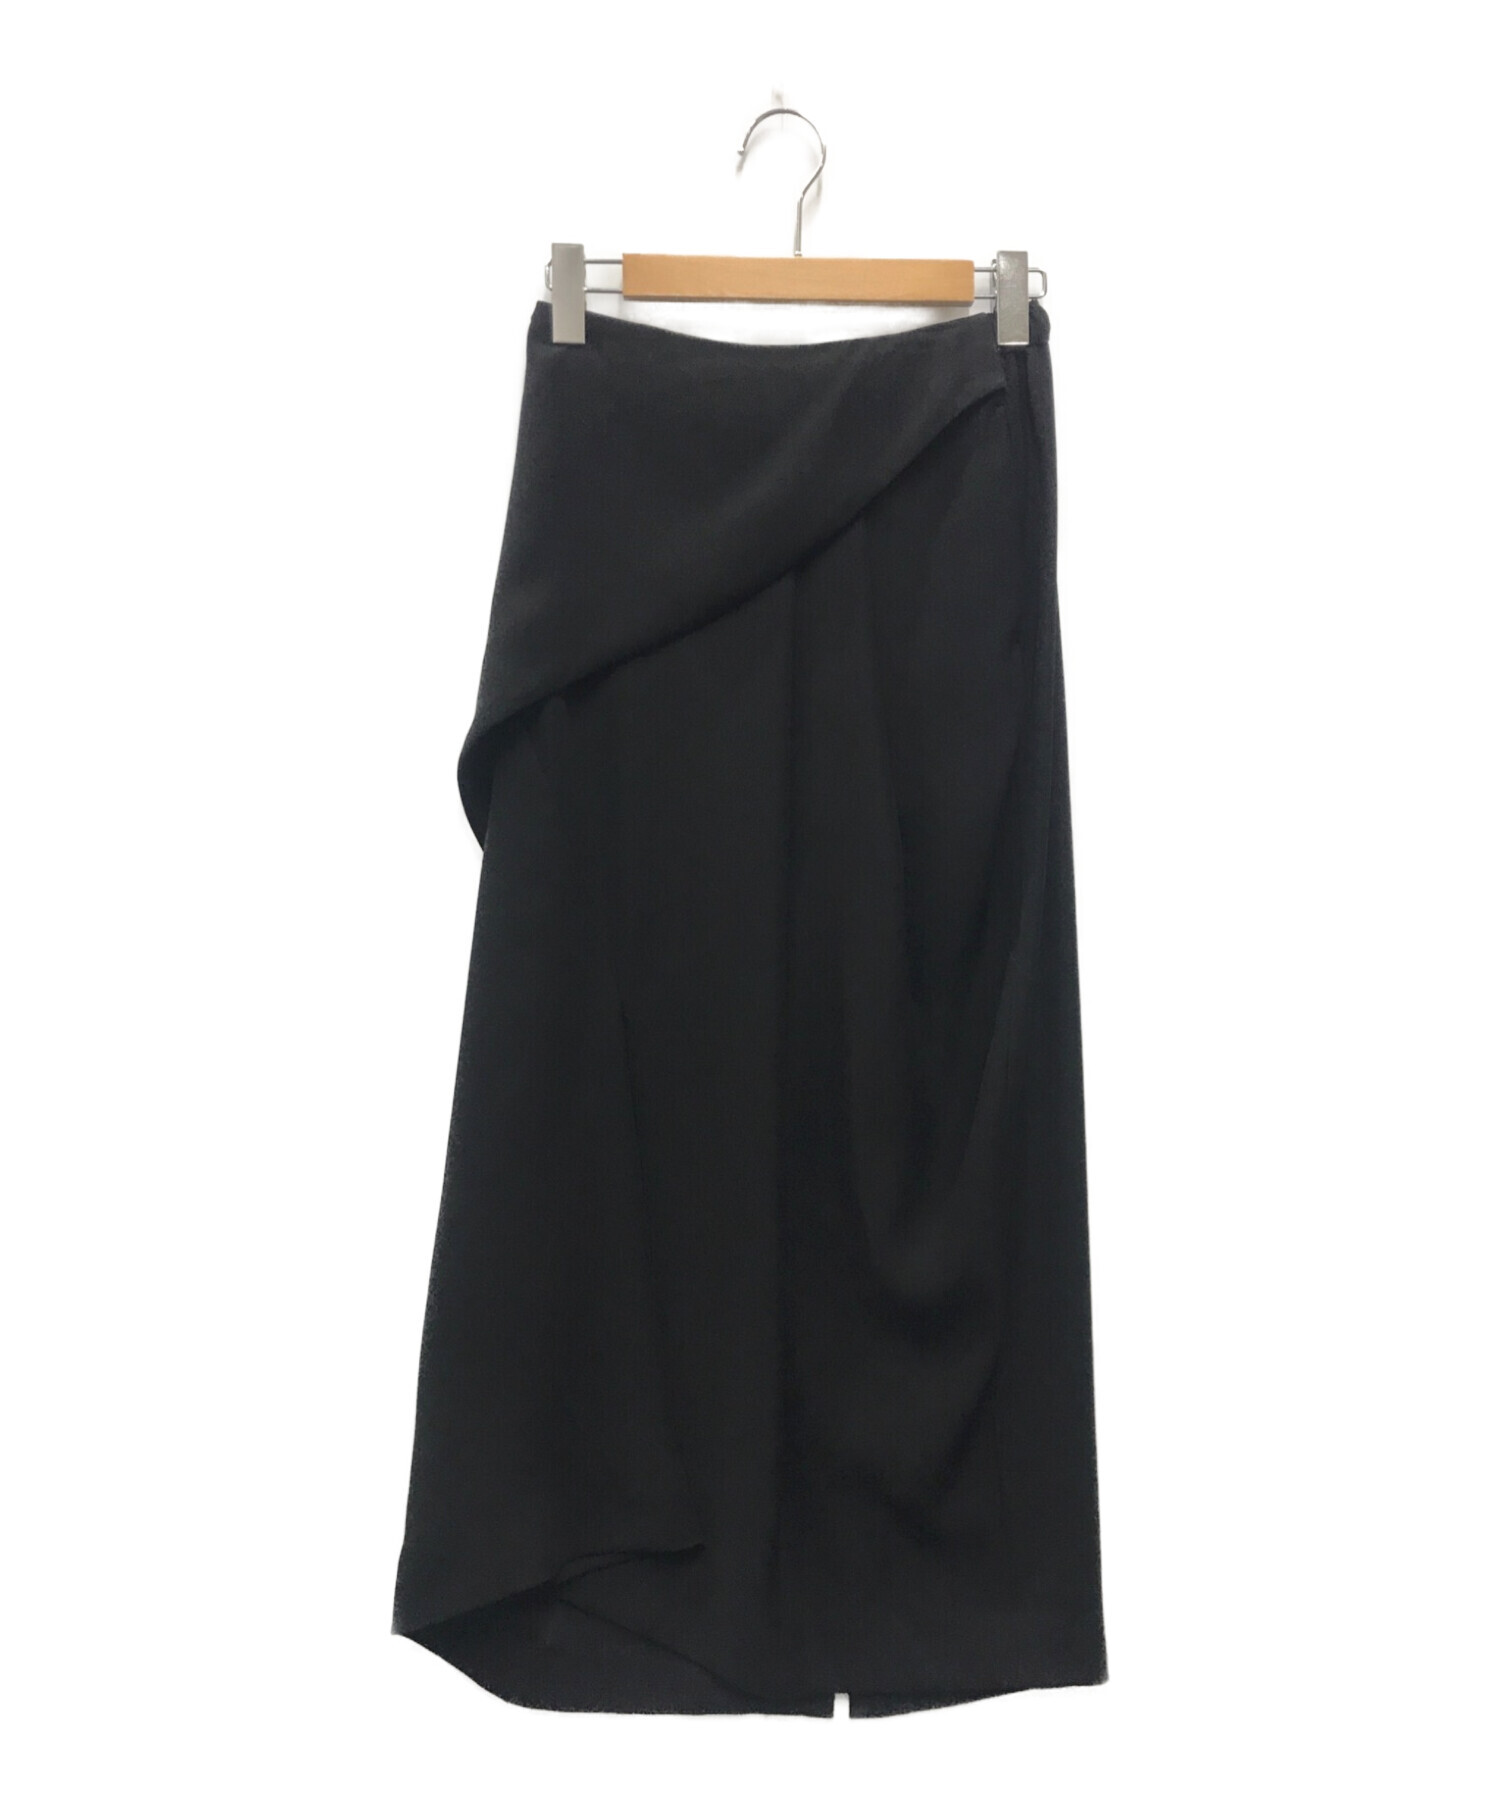 ENFOLD (エンフォルド) ライトダブルサテン タックドレープスカート ブラック サイズ:38